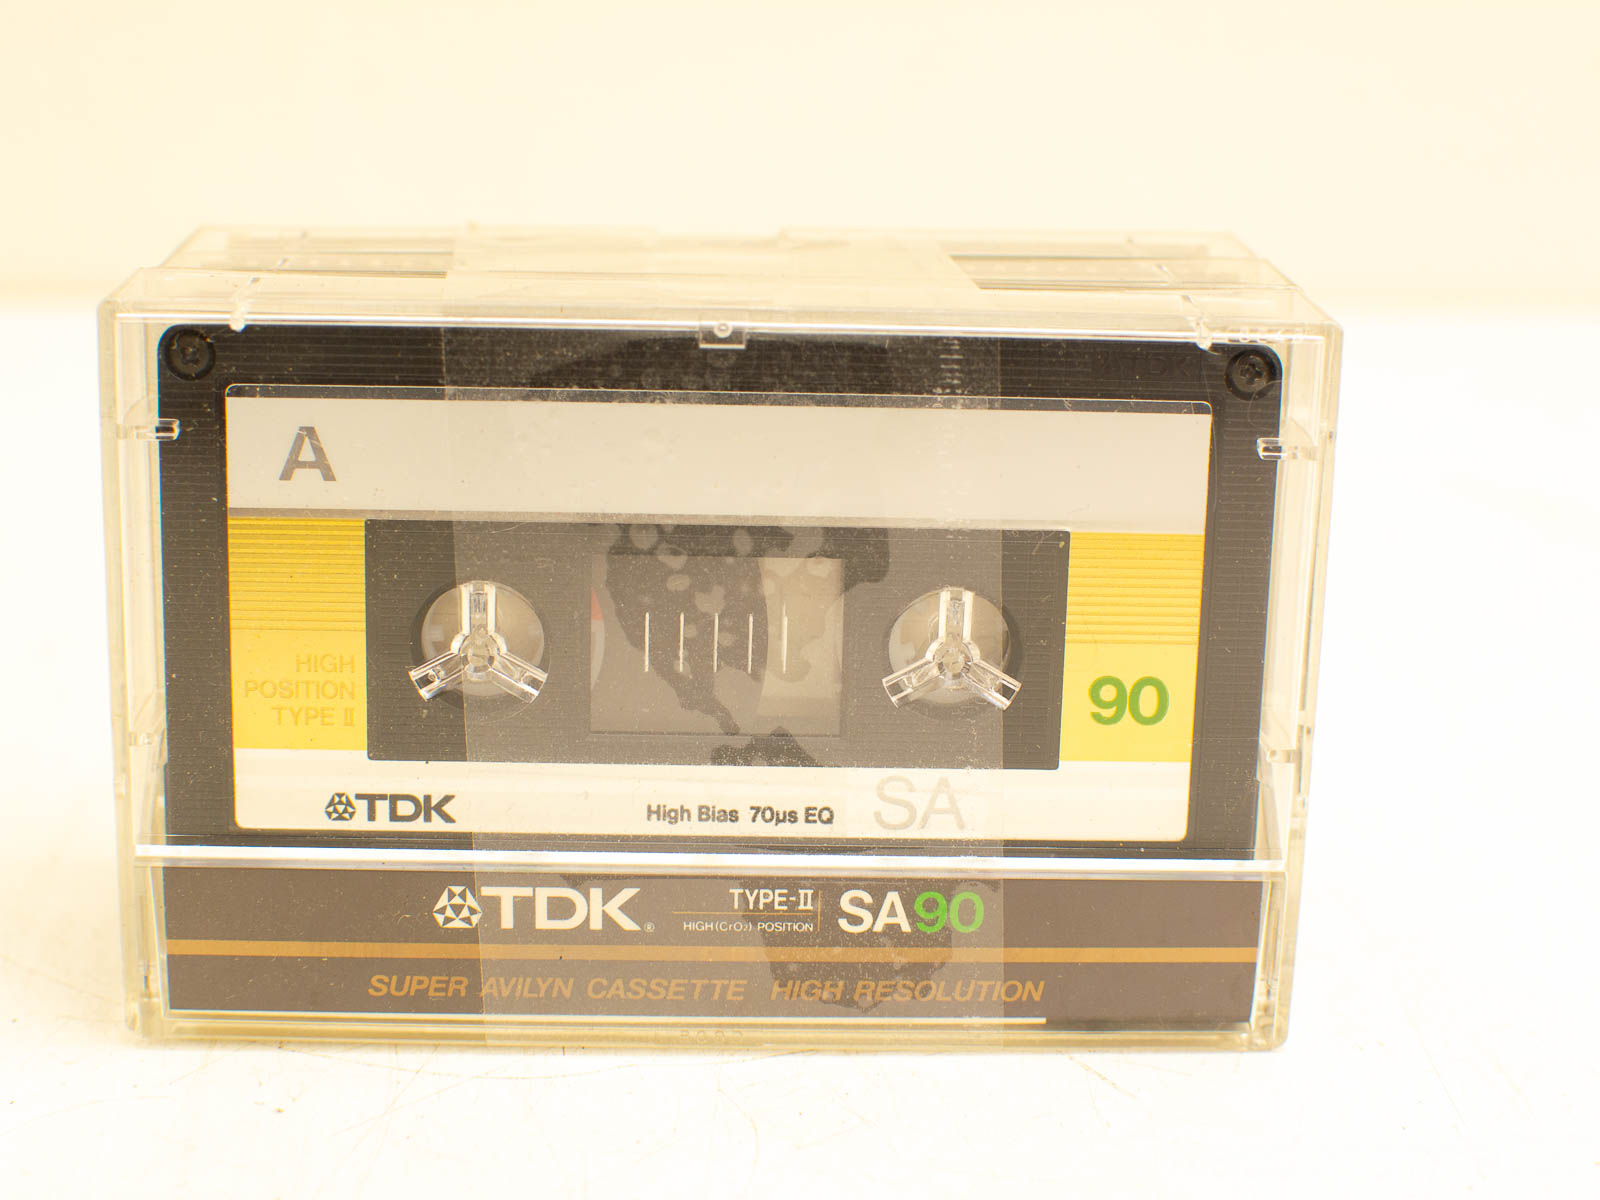 3 TDK cassettebandjes  31191